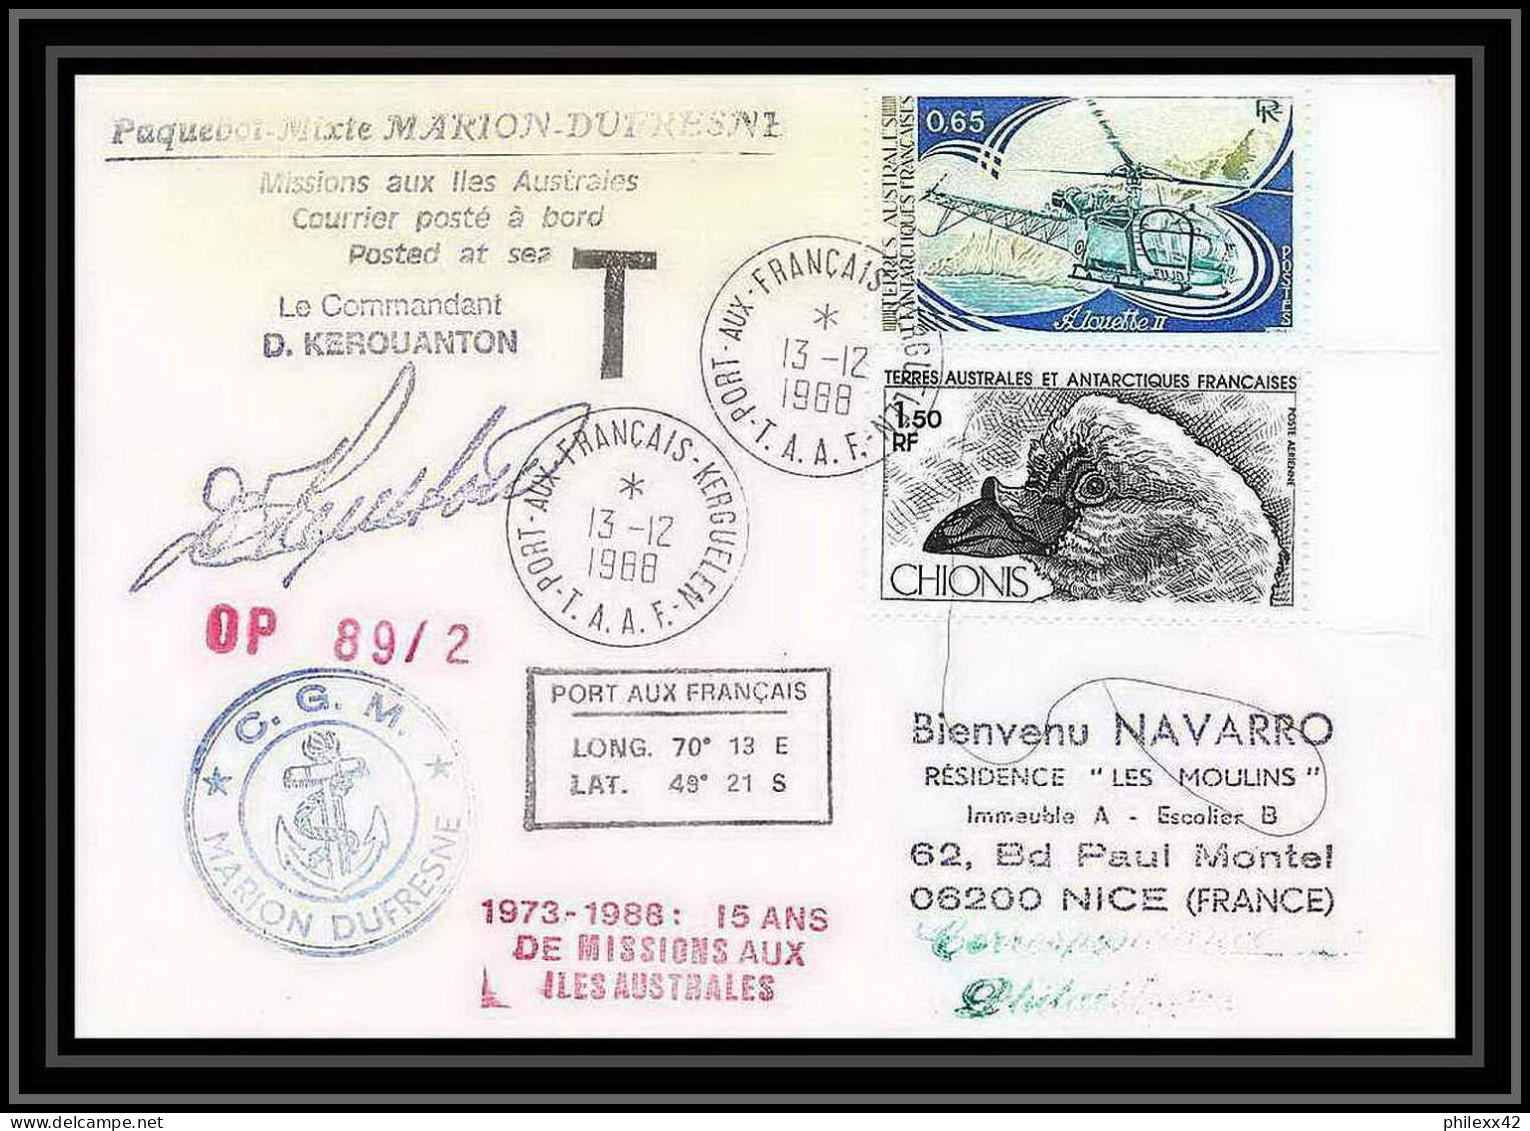 1588 89/2 13/12/1988 Marion Dufresne Signé Signed Kerouanton Taxe TAAF Antarctic Terres Australes Lettre (cover) - Spedizioni Antartiche